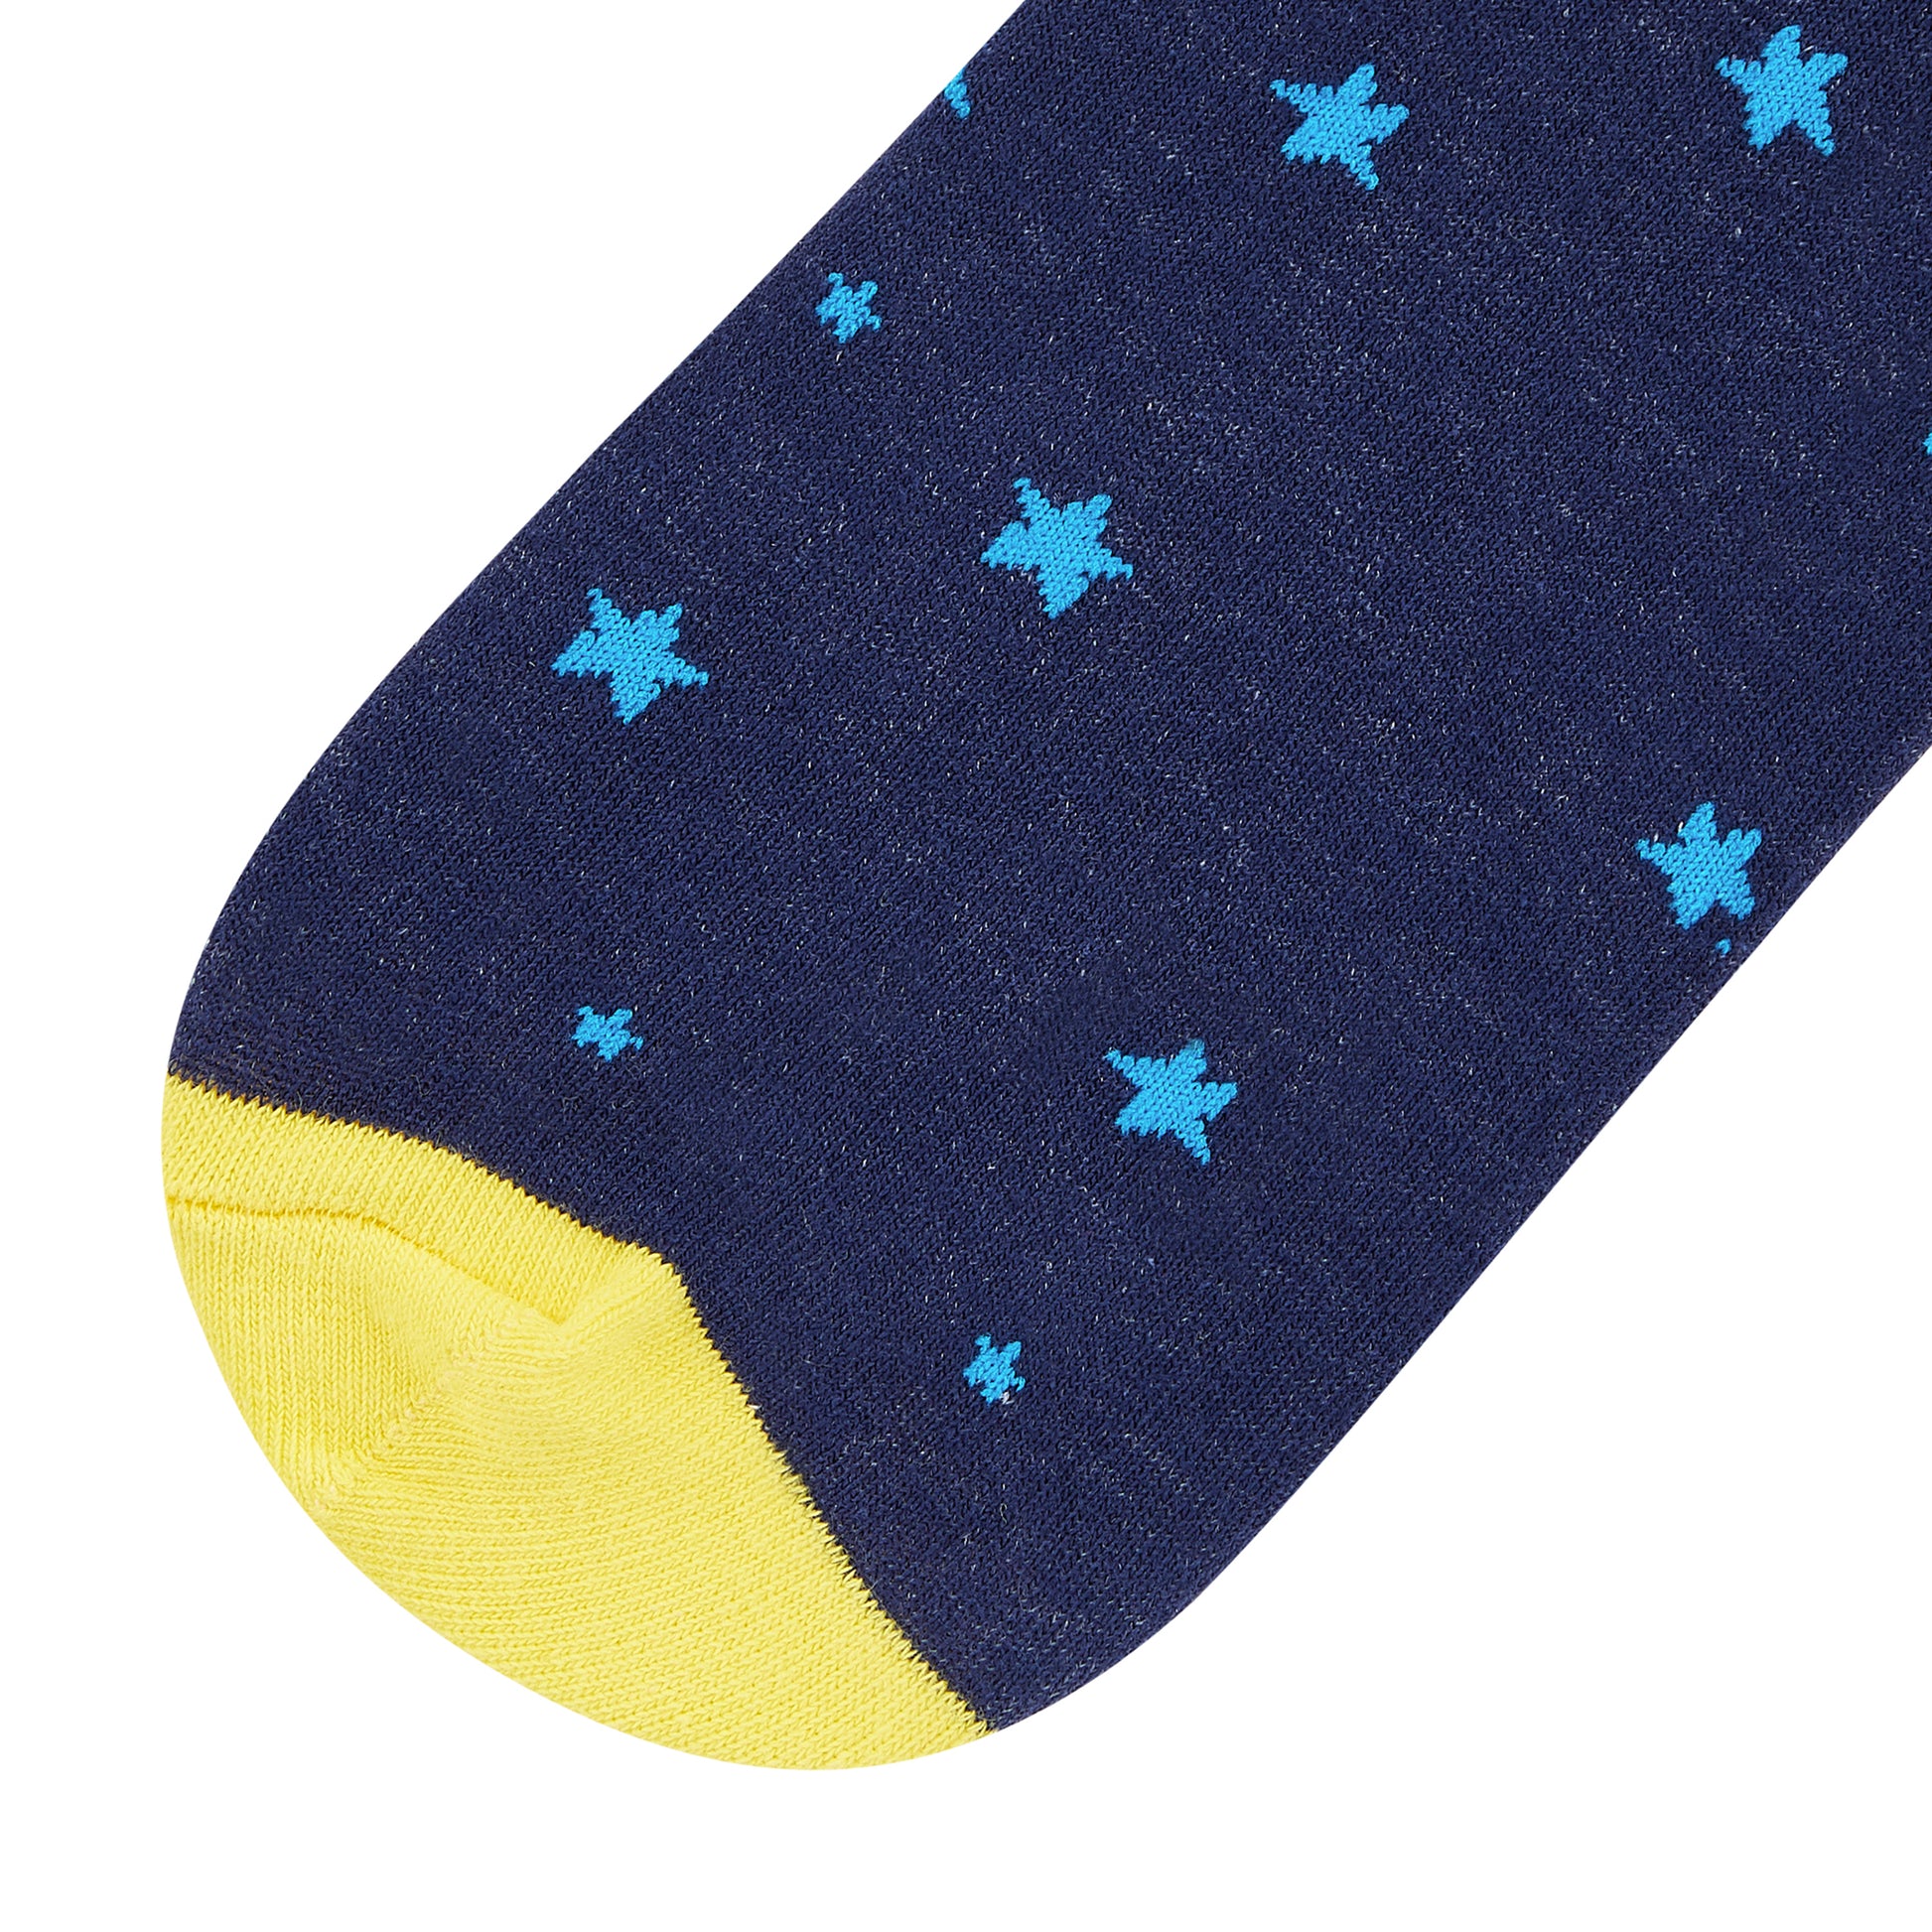 Space Jam Printed Crew Length Socks - IDENTITY Apparel Shop